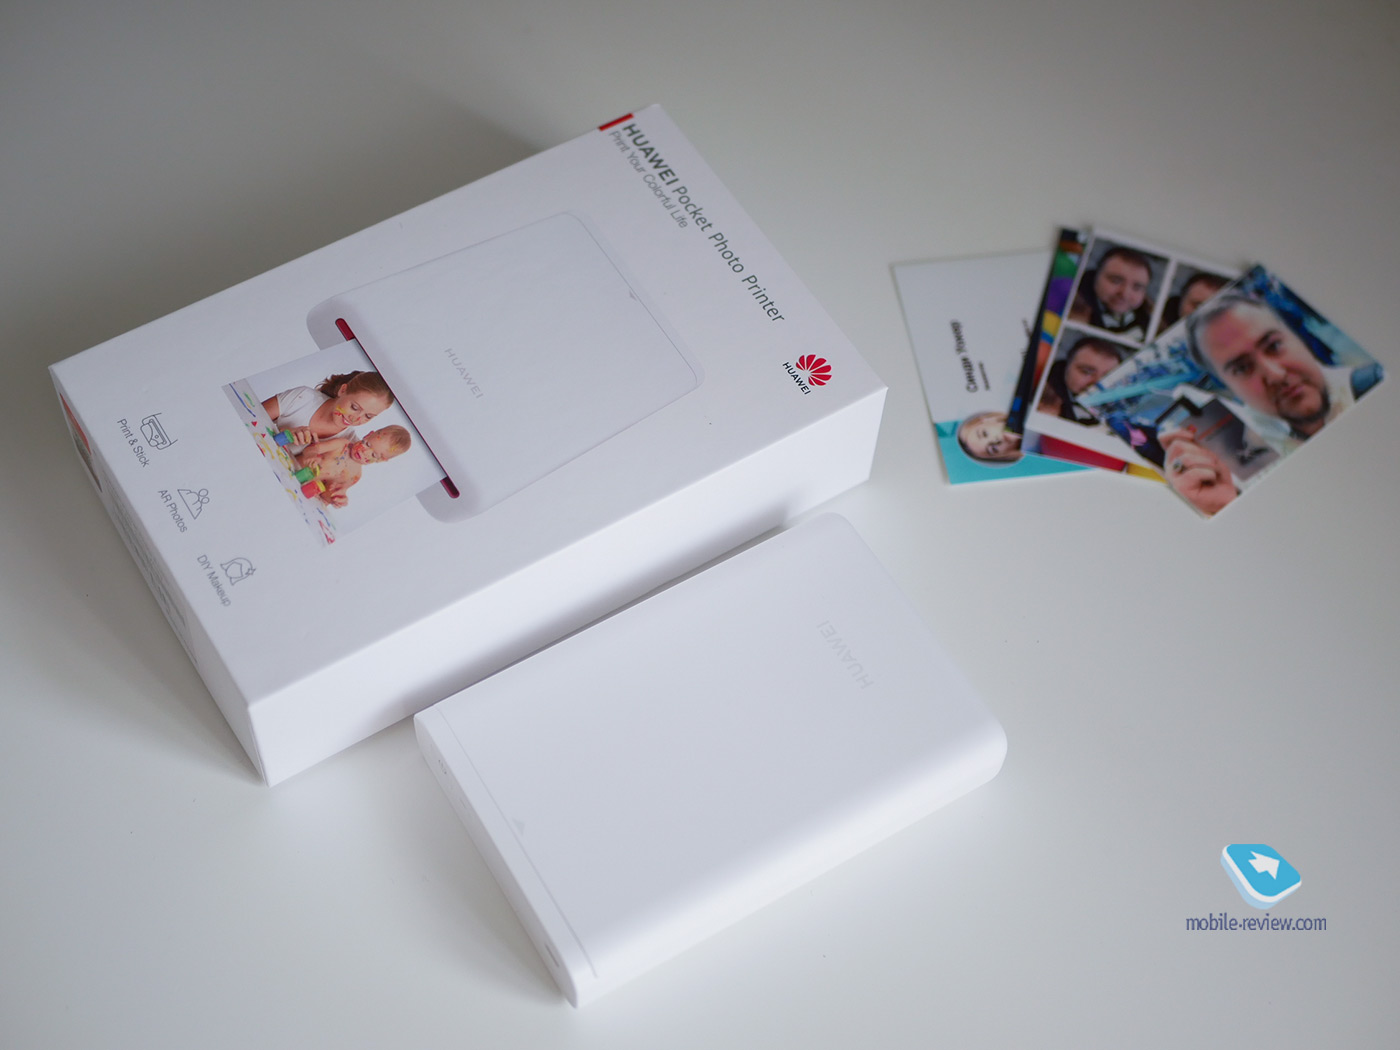 Подборка: JBL Charge 4, Huawei Pocket Photo Printer и аксессуары Ugreen